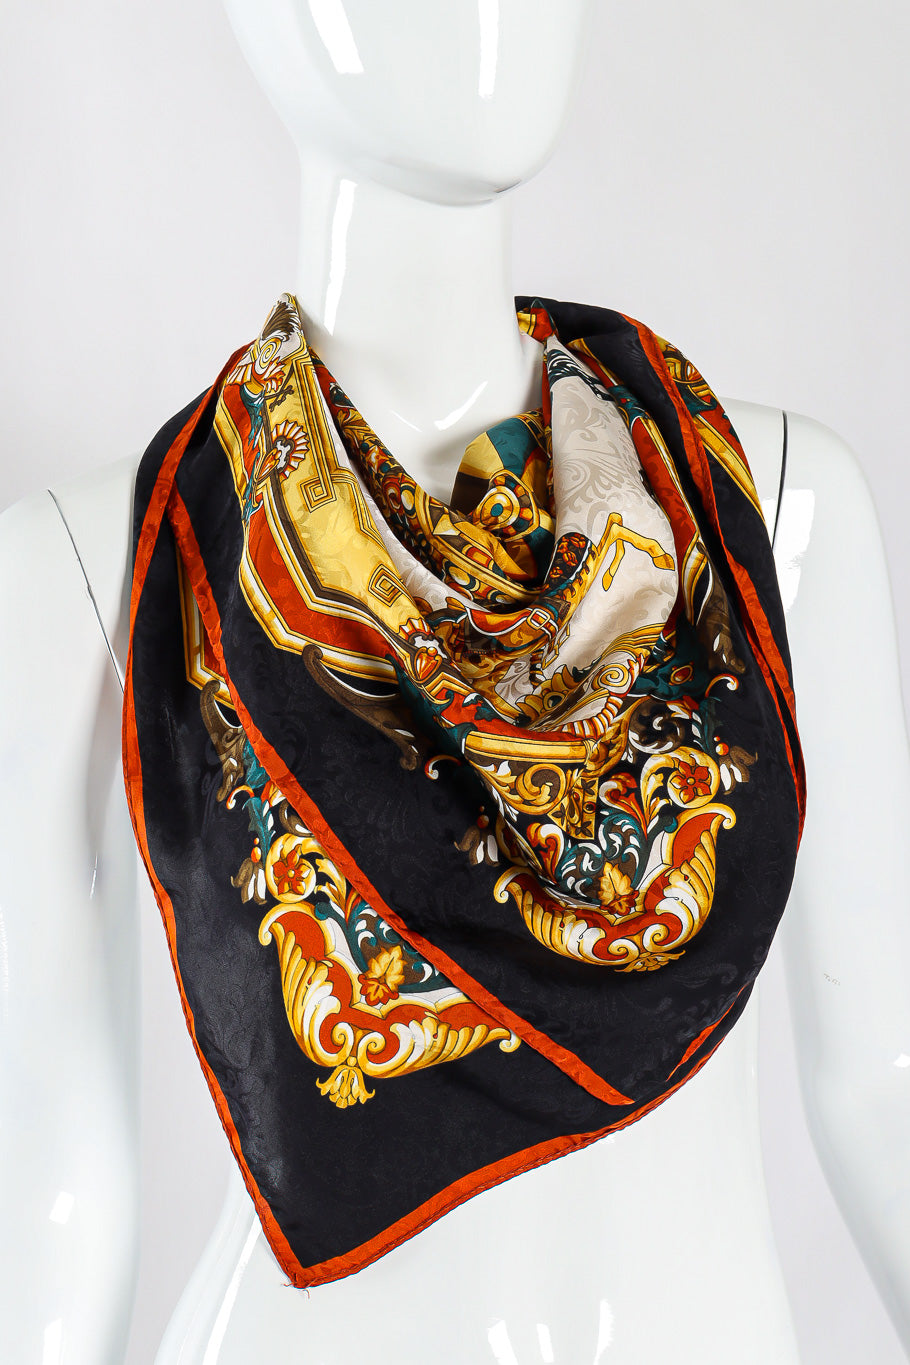 Merry-go-round print scarf by Pierre Cardin photo on Mannequin. @recessla 